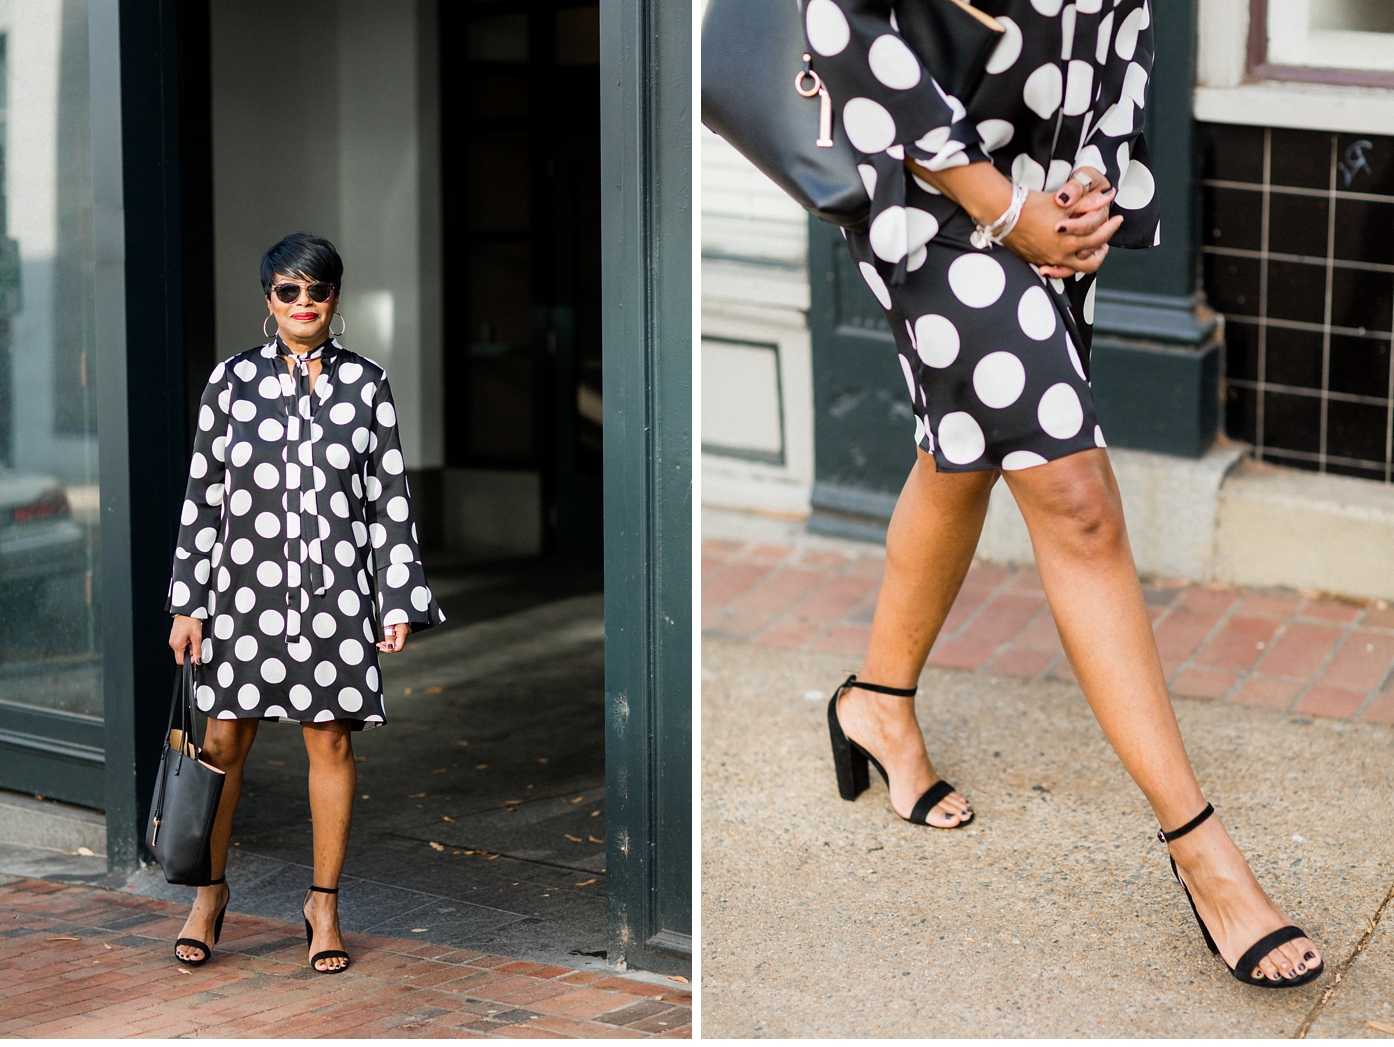 60's Vibes Black and White polka dot dress | Richmond Fashion Blogger MedleyStyle by Alisandra Photography